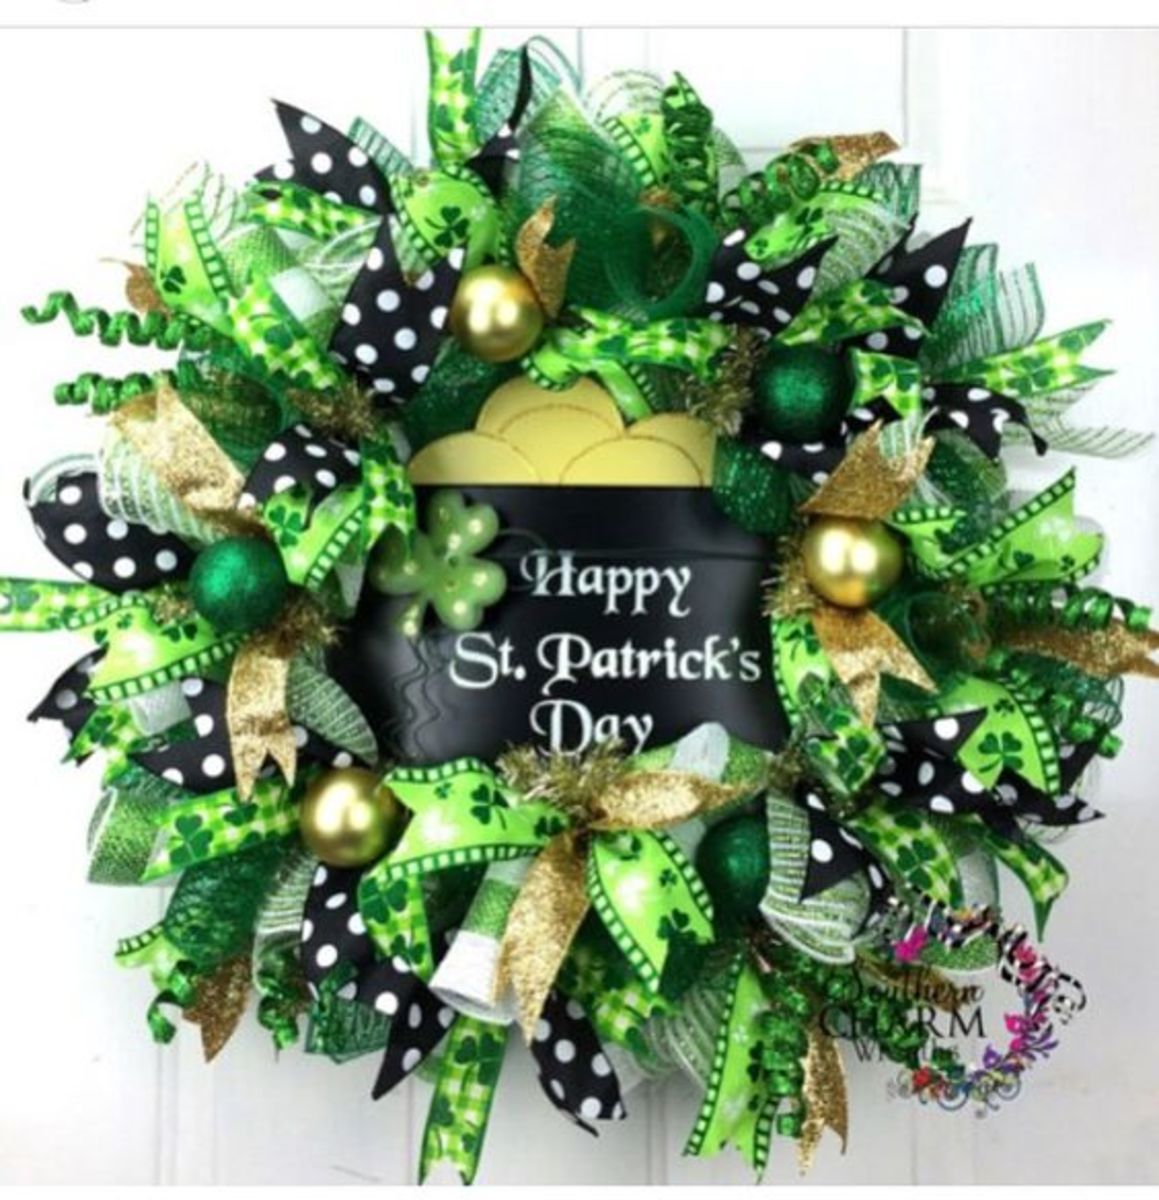 st-patricks-day-wreath-ideas